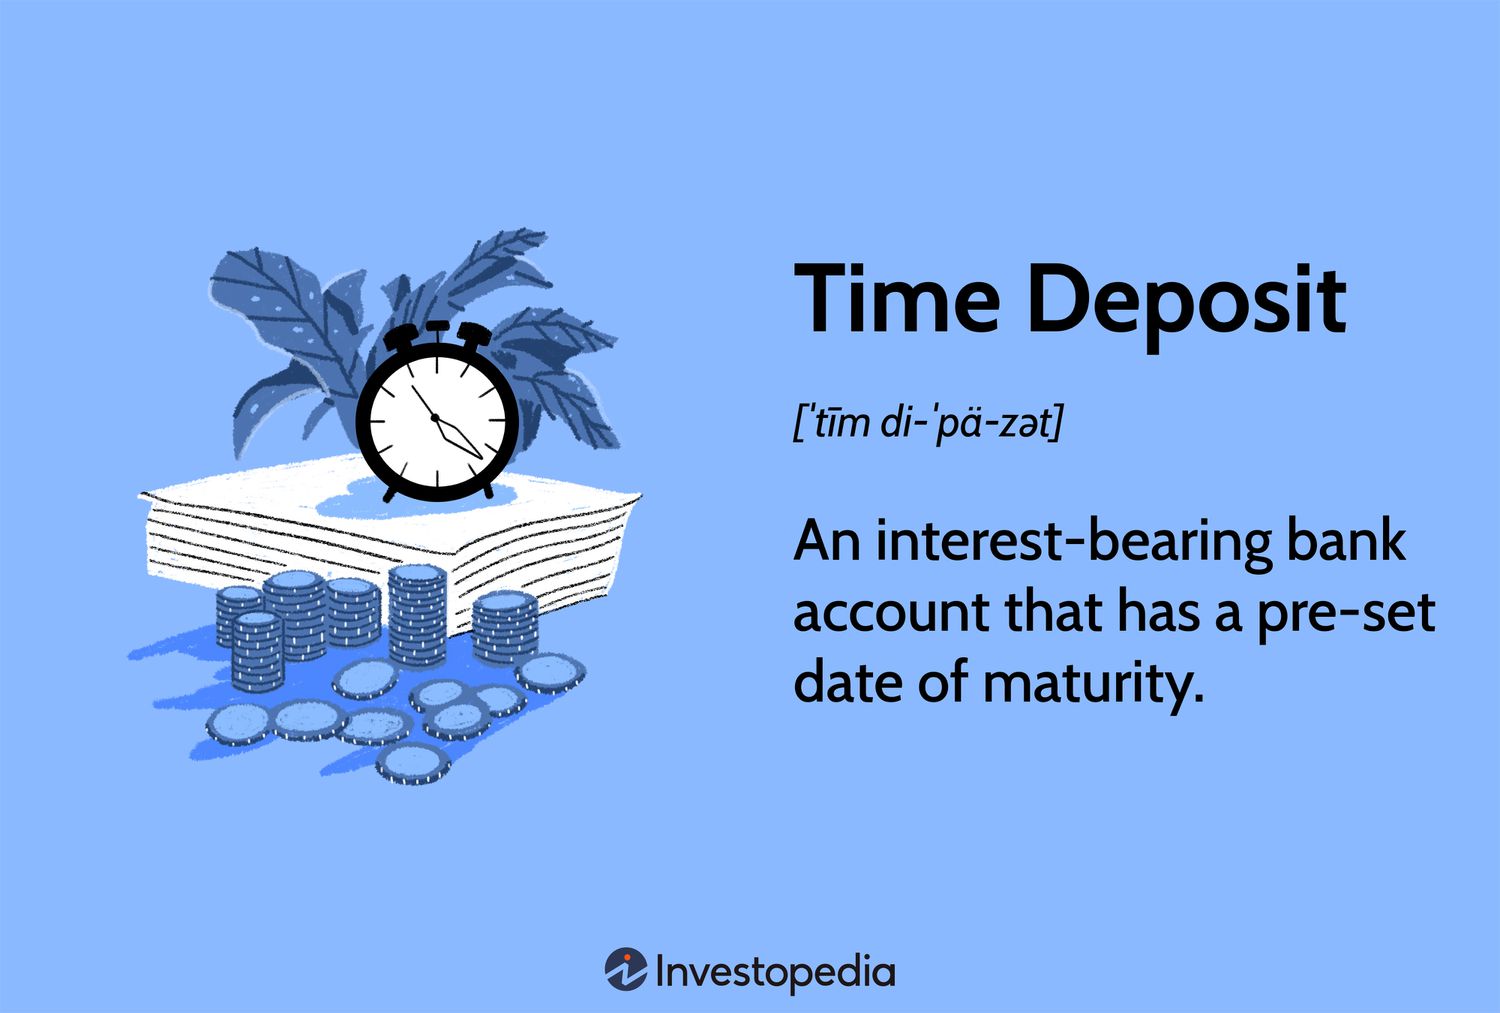 Singapore Dollar Time Deposit - Standard Chartered Singapore